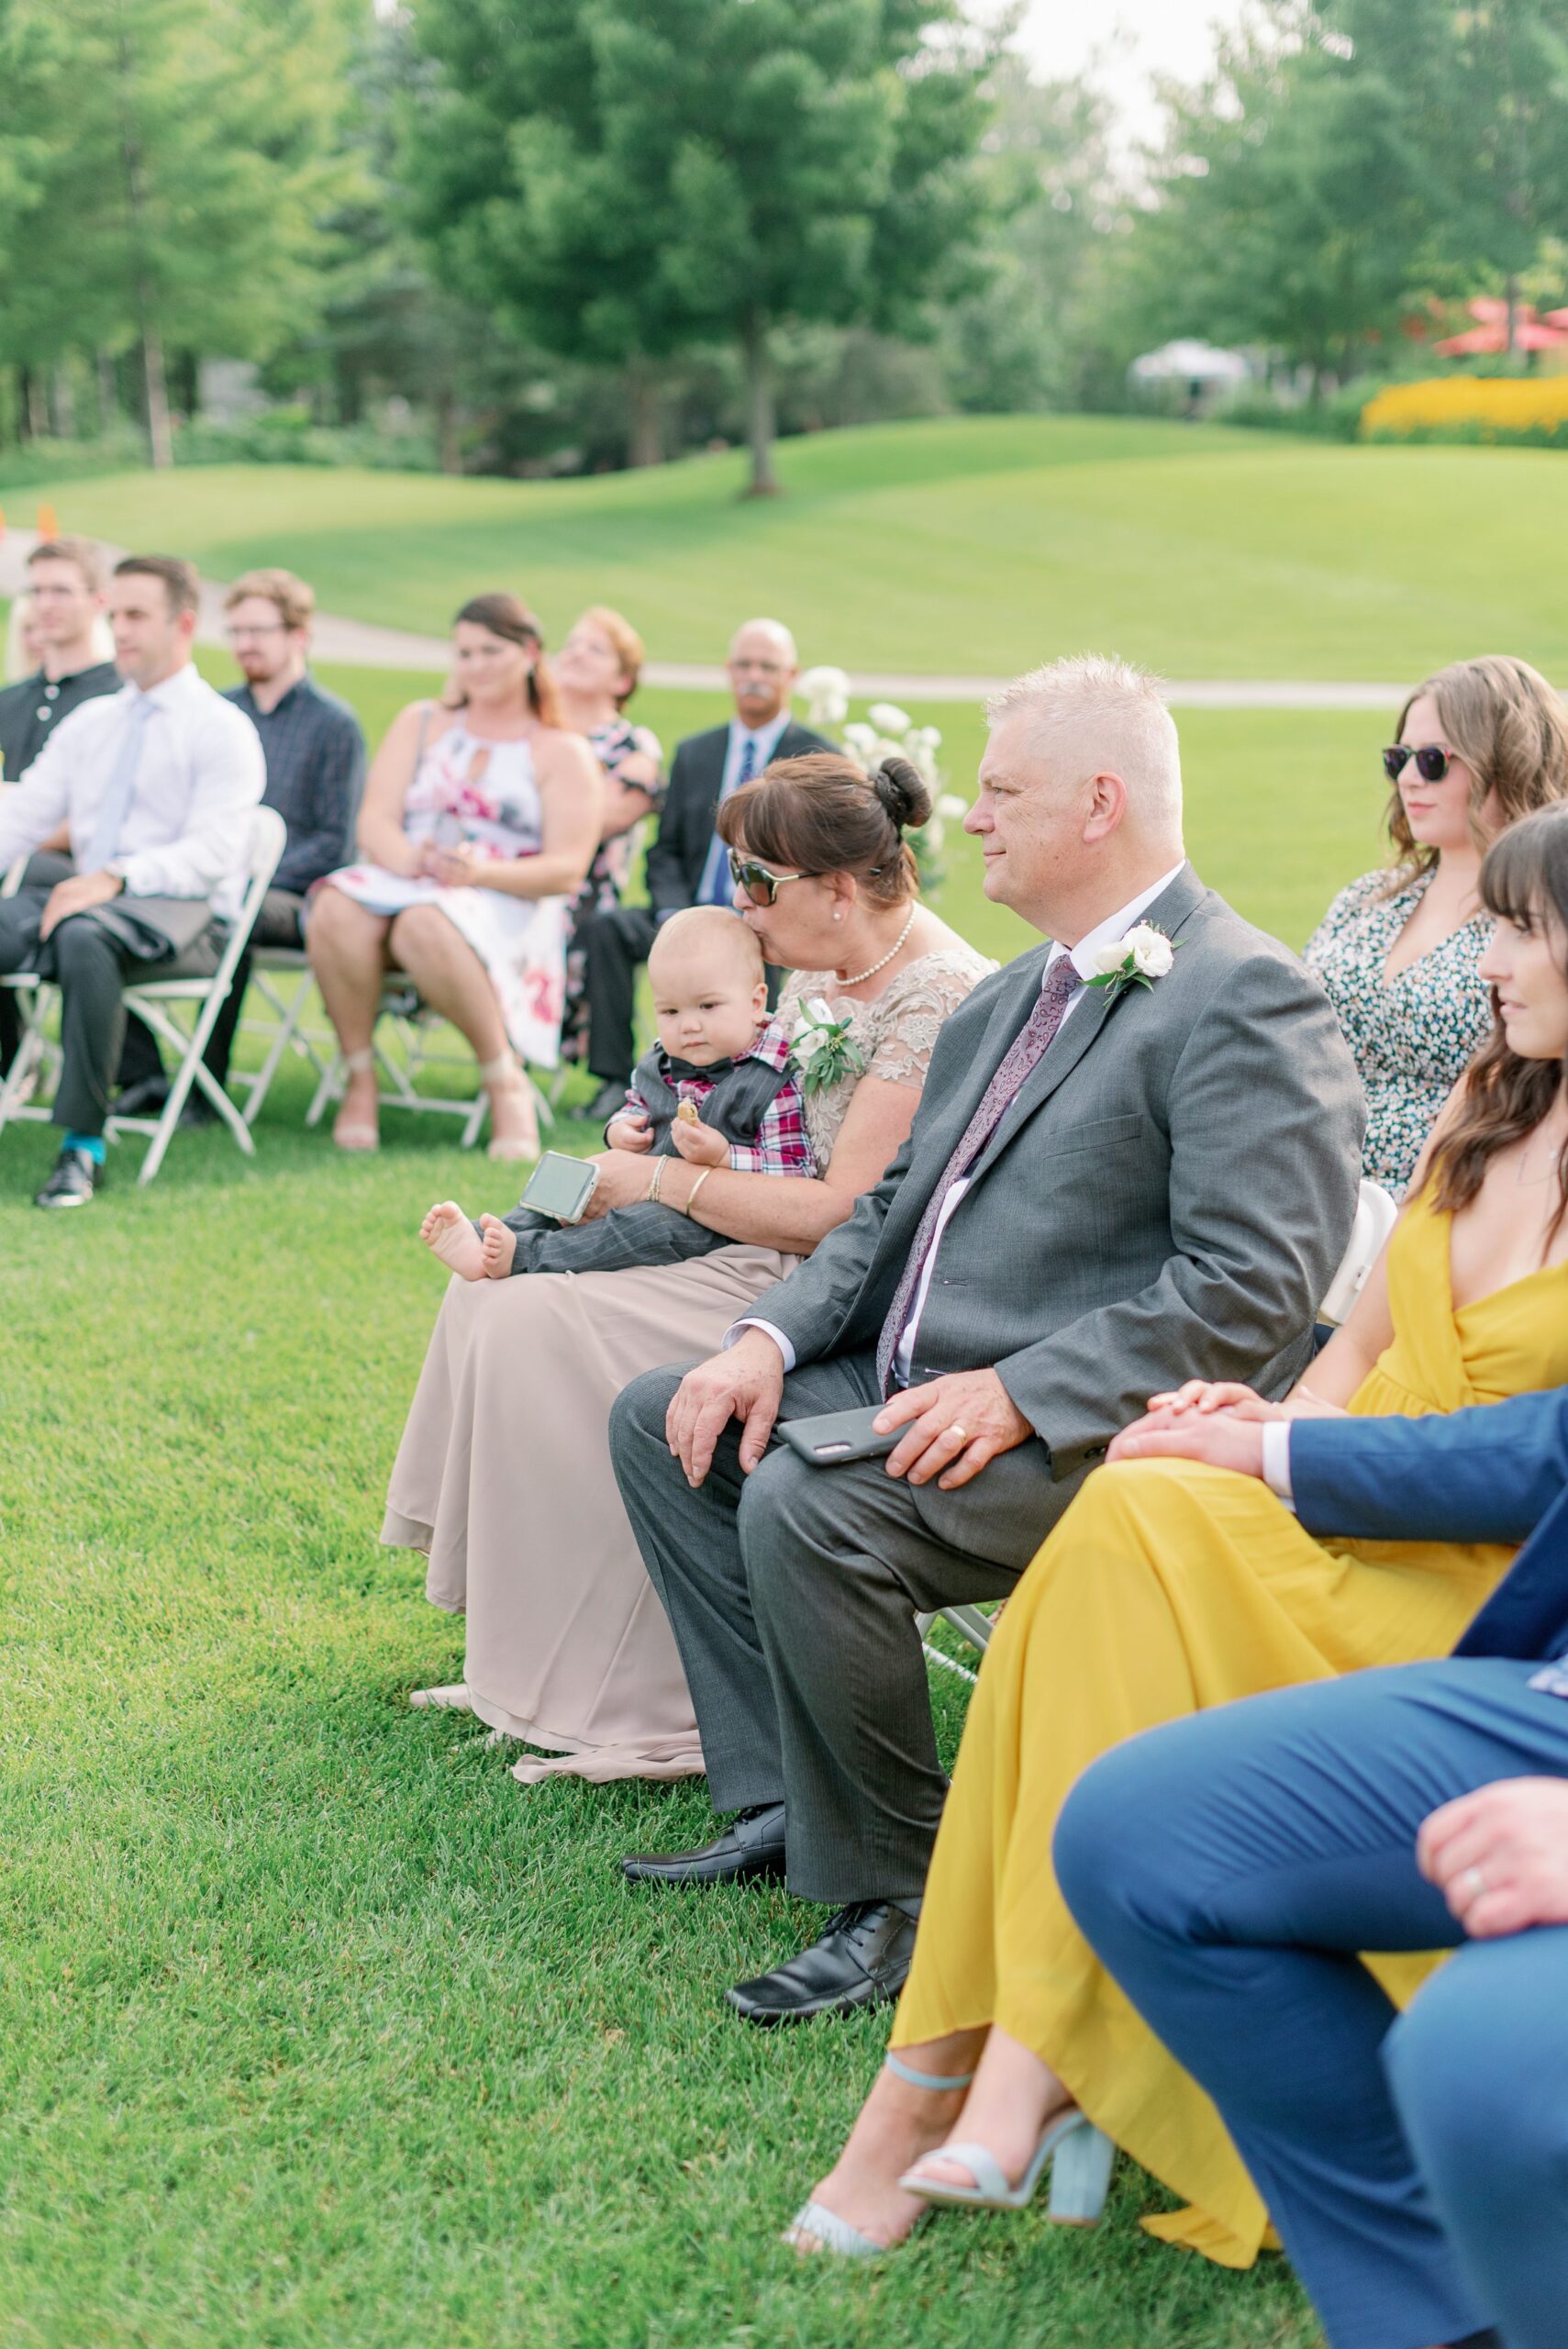 Guests at outdoor wedding in Barrie, Ontario.